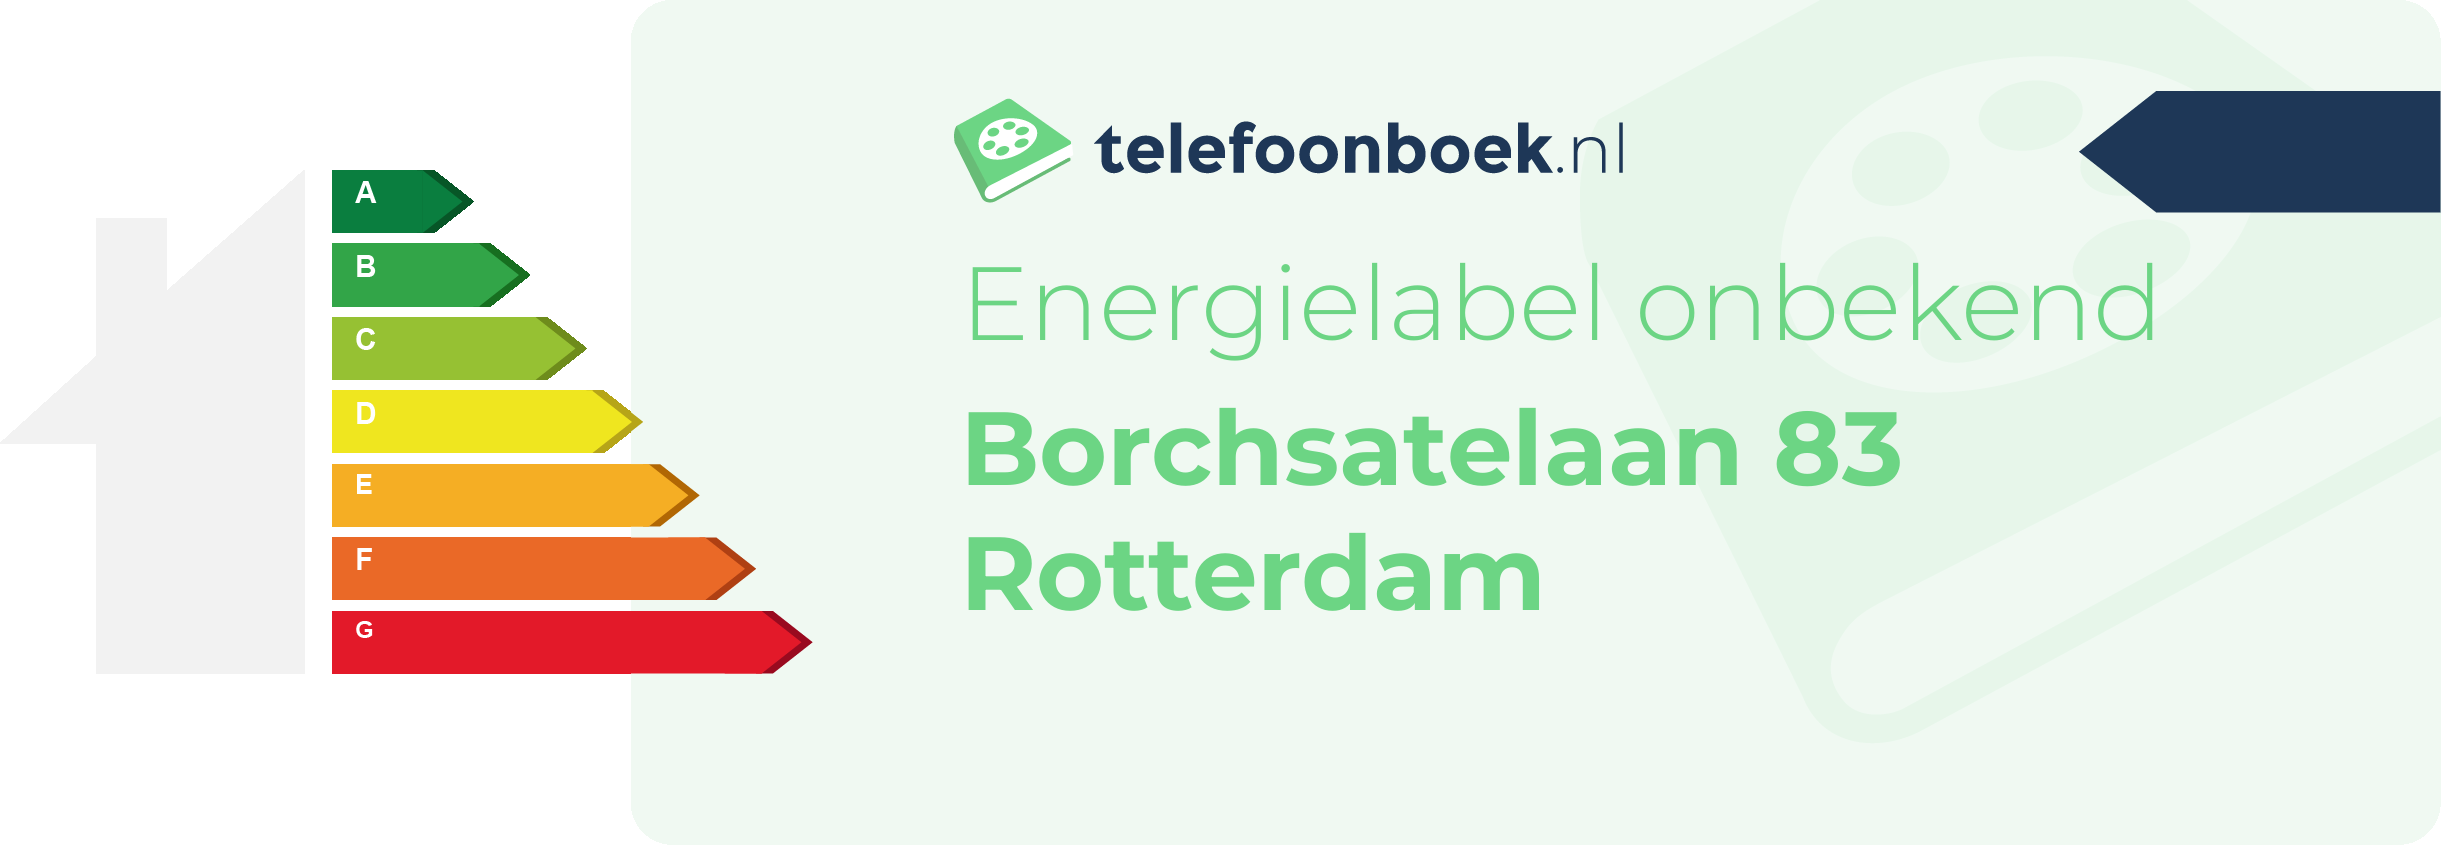 Energielabel Borchsatelaan 83 Rotterdam